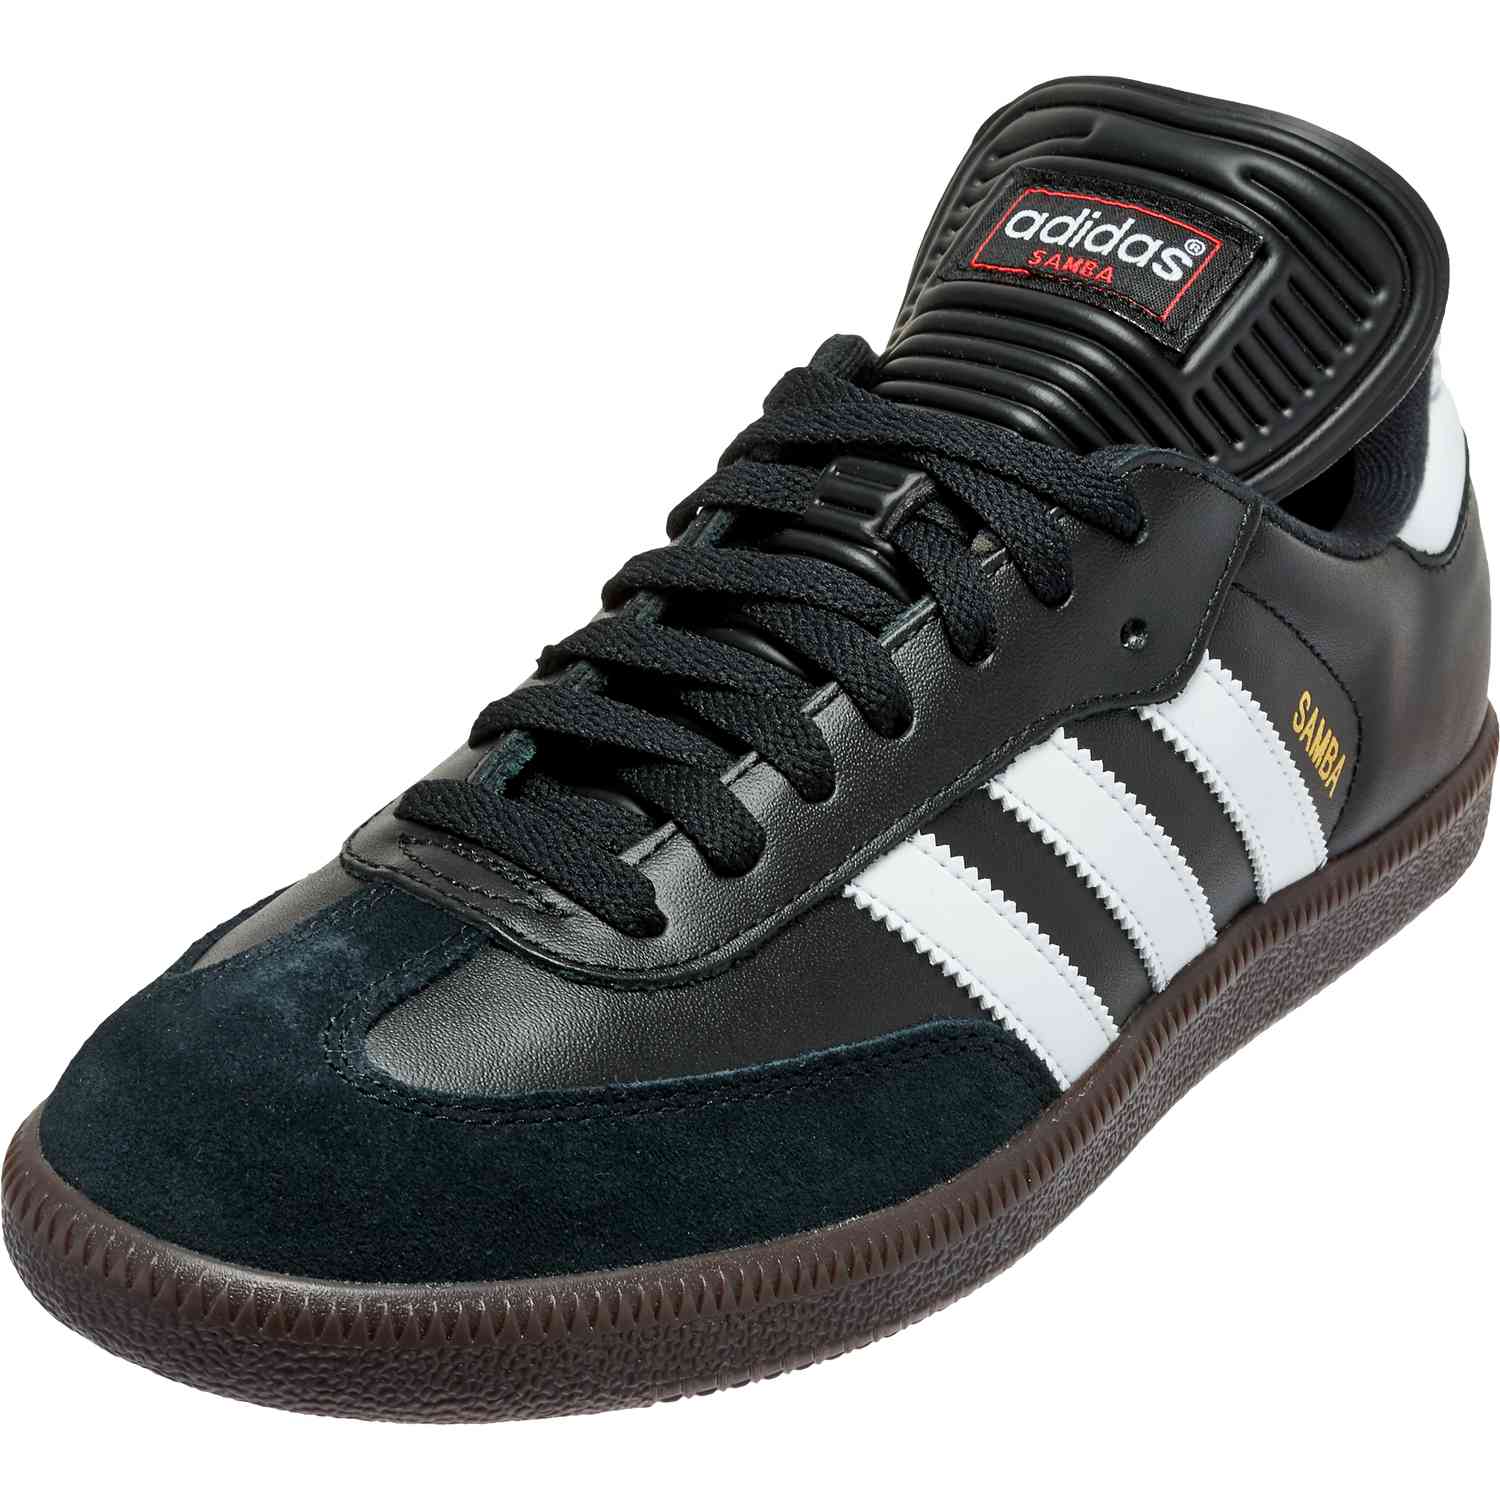 samba classic soccer shoes